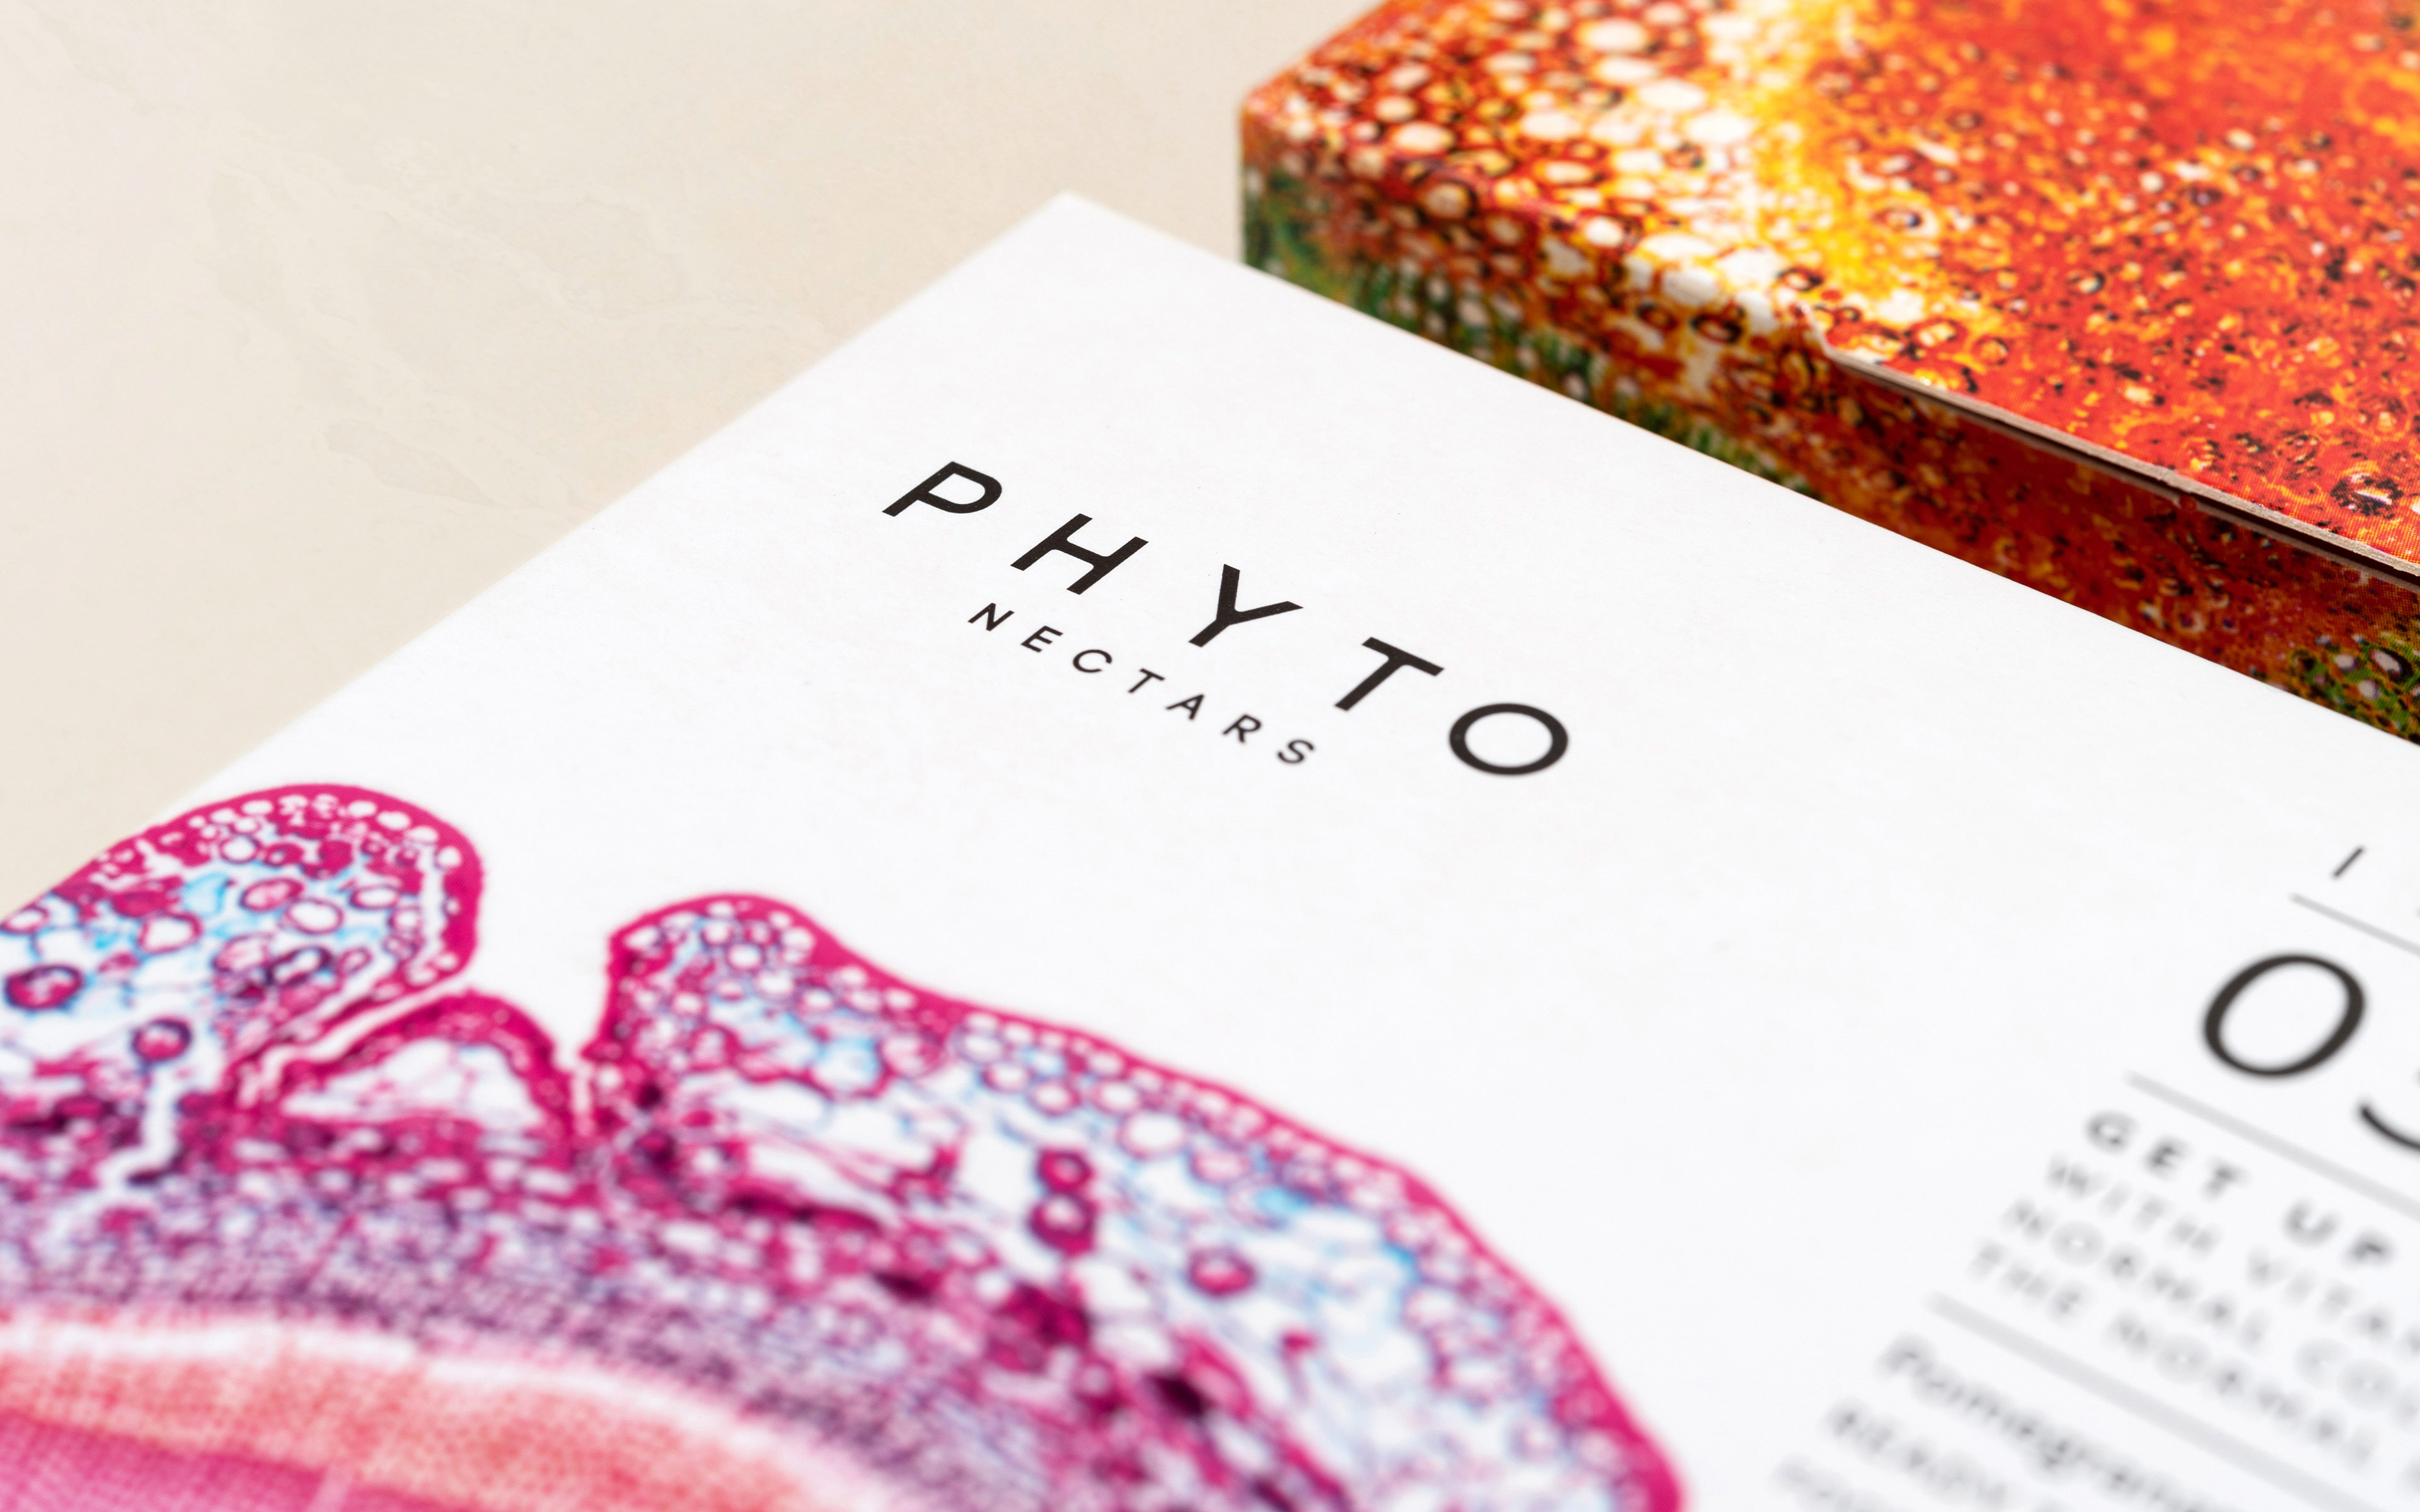 Phyto Nectars Packaging Design